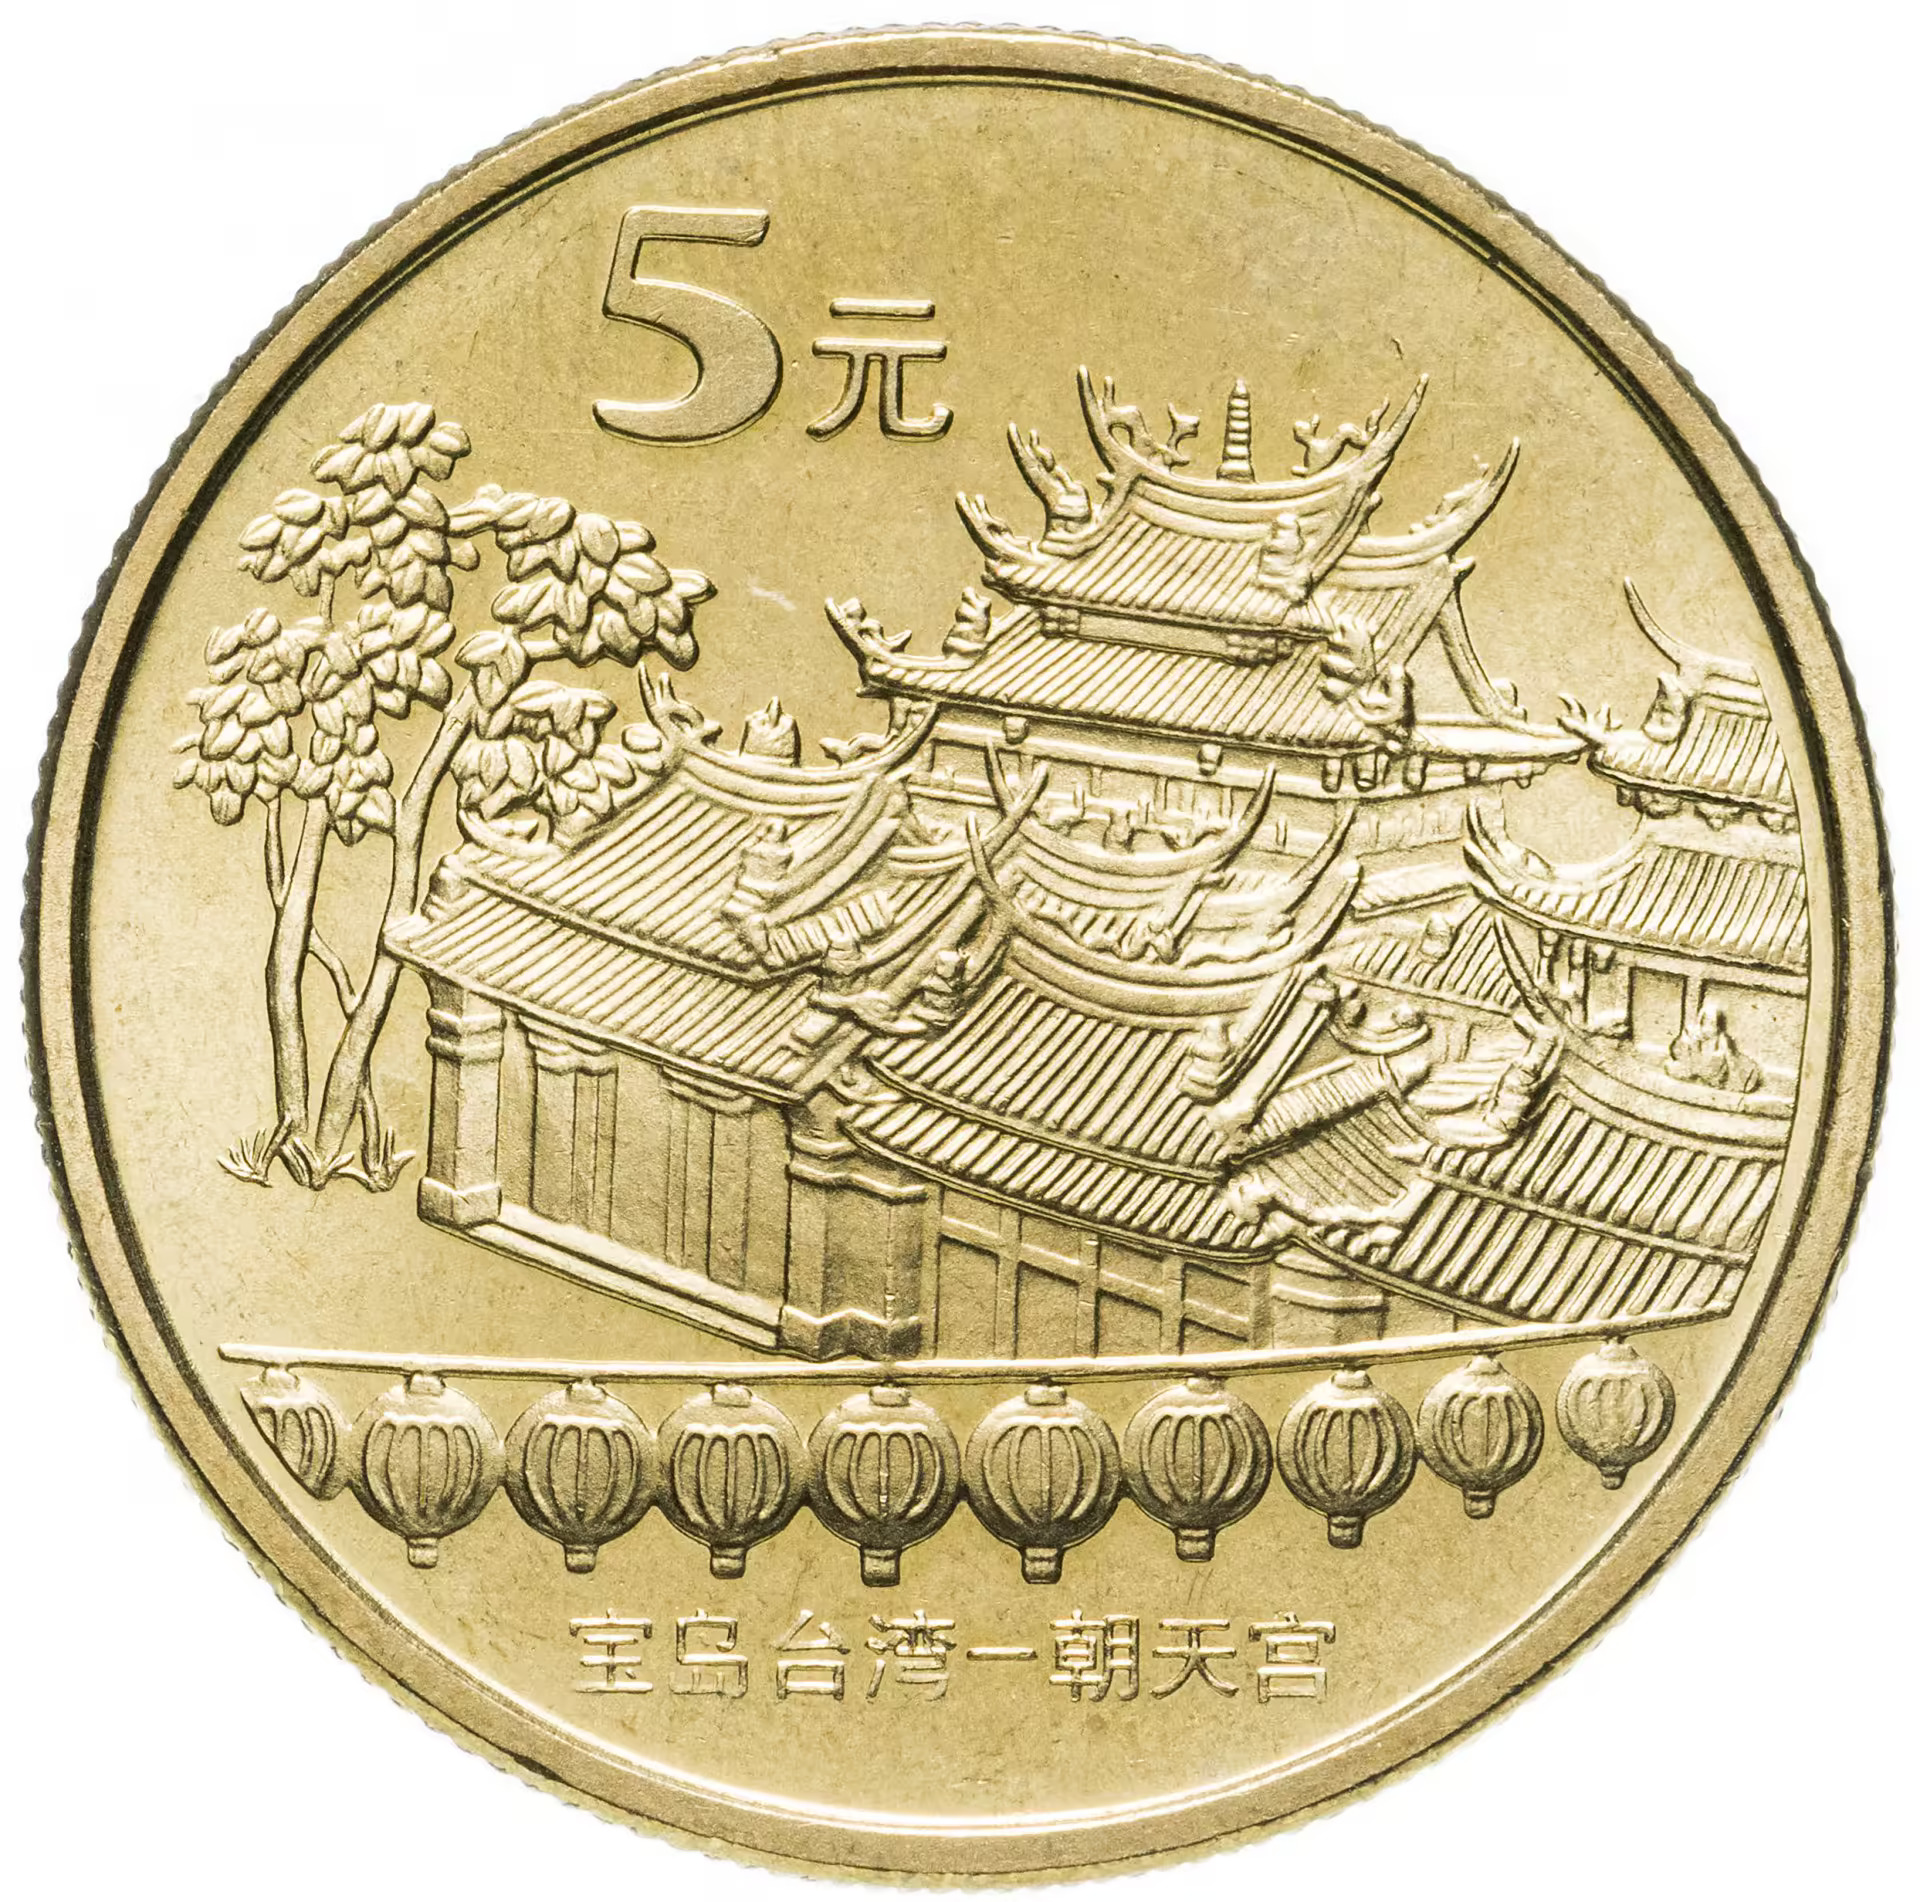 Китайские 5 рублей. Китай манет 2003. Китайский юань монета. 5 Юаней Китай. Юань монеты Китая.